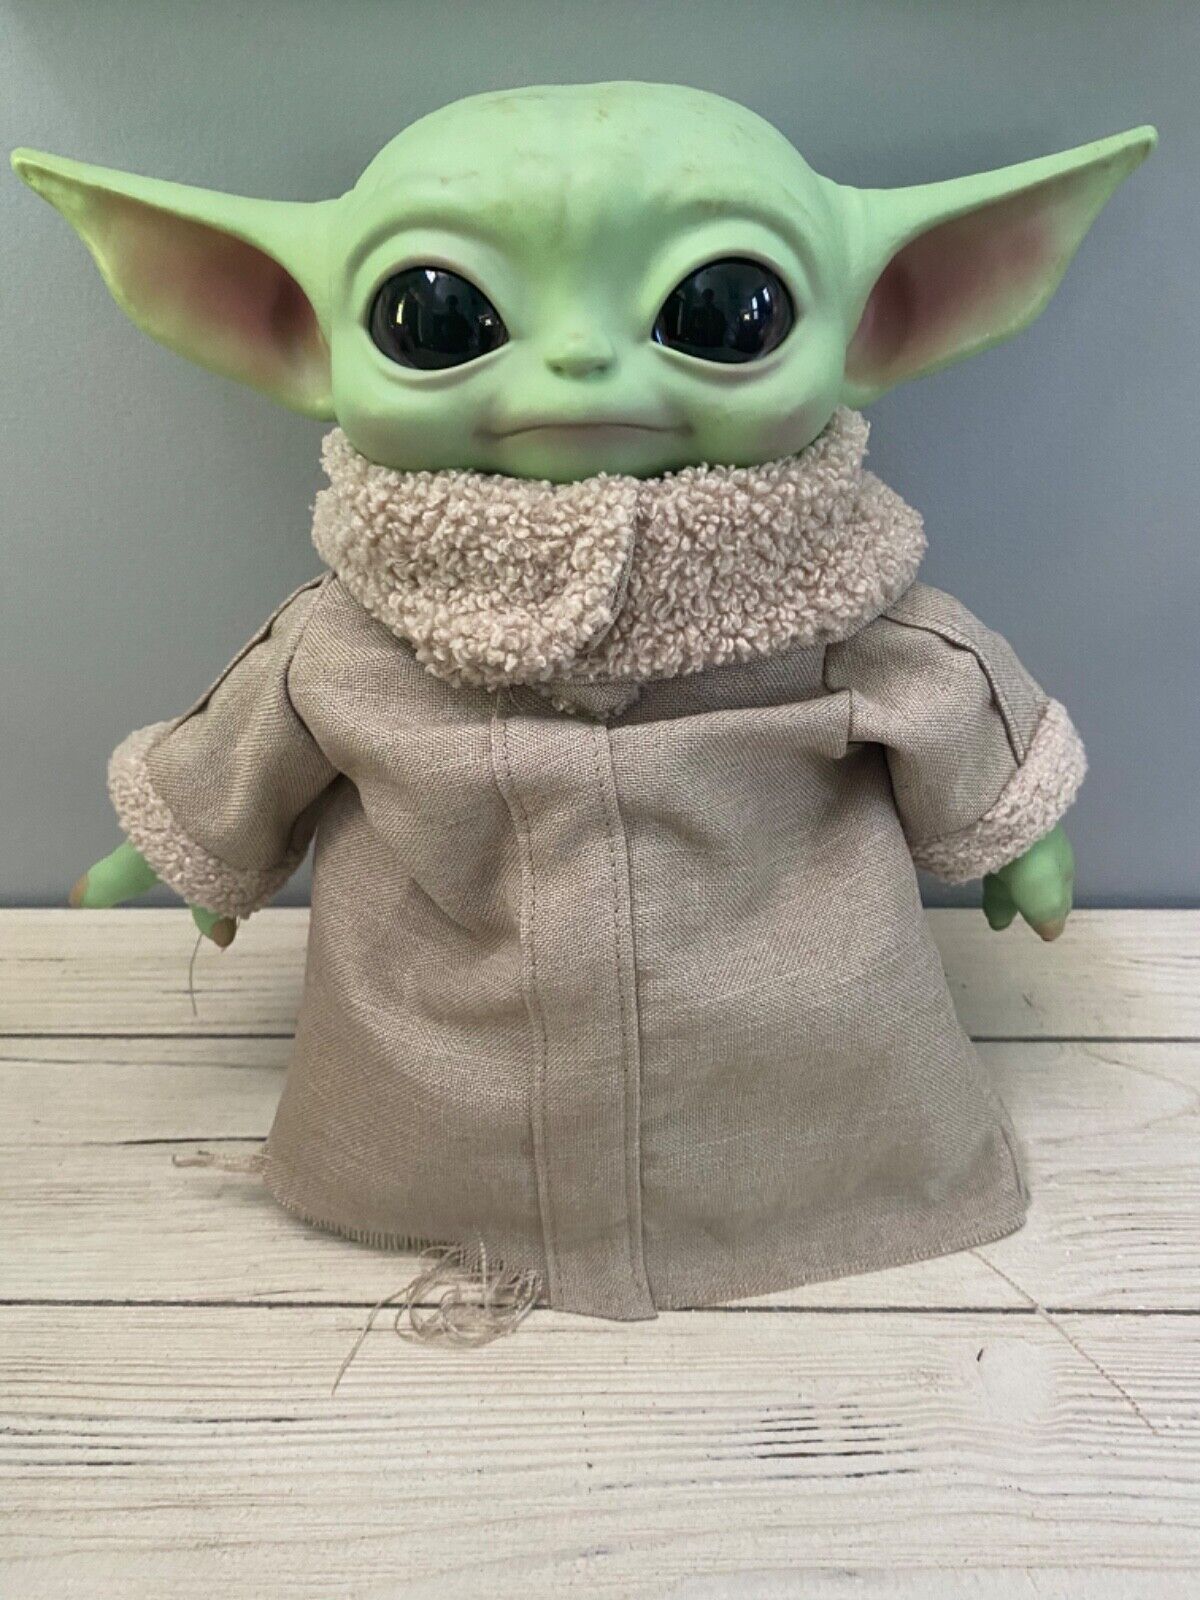 The Child 11 Inch Doll Baby Yoda Grogu Mattel Star Wars Mandalorian Plush